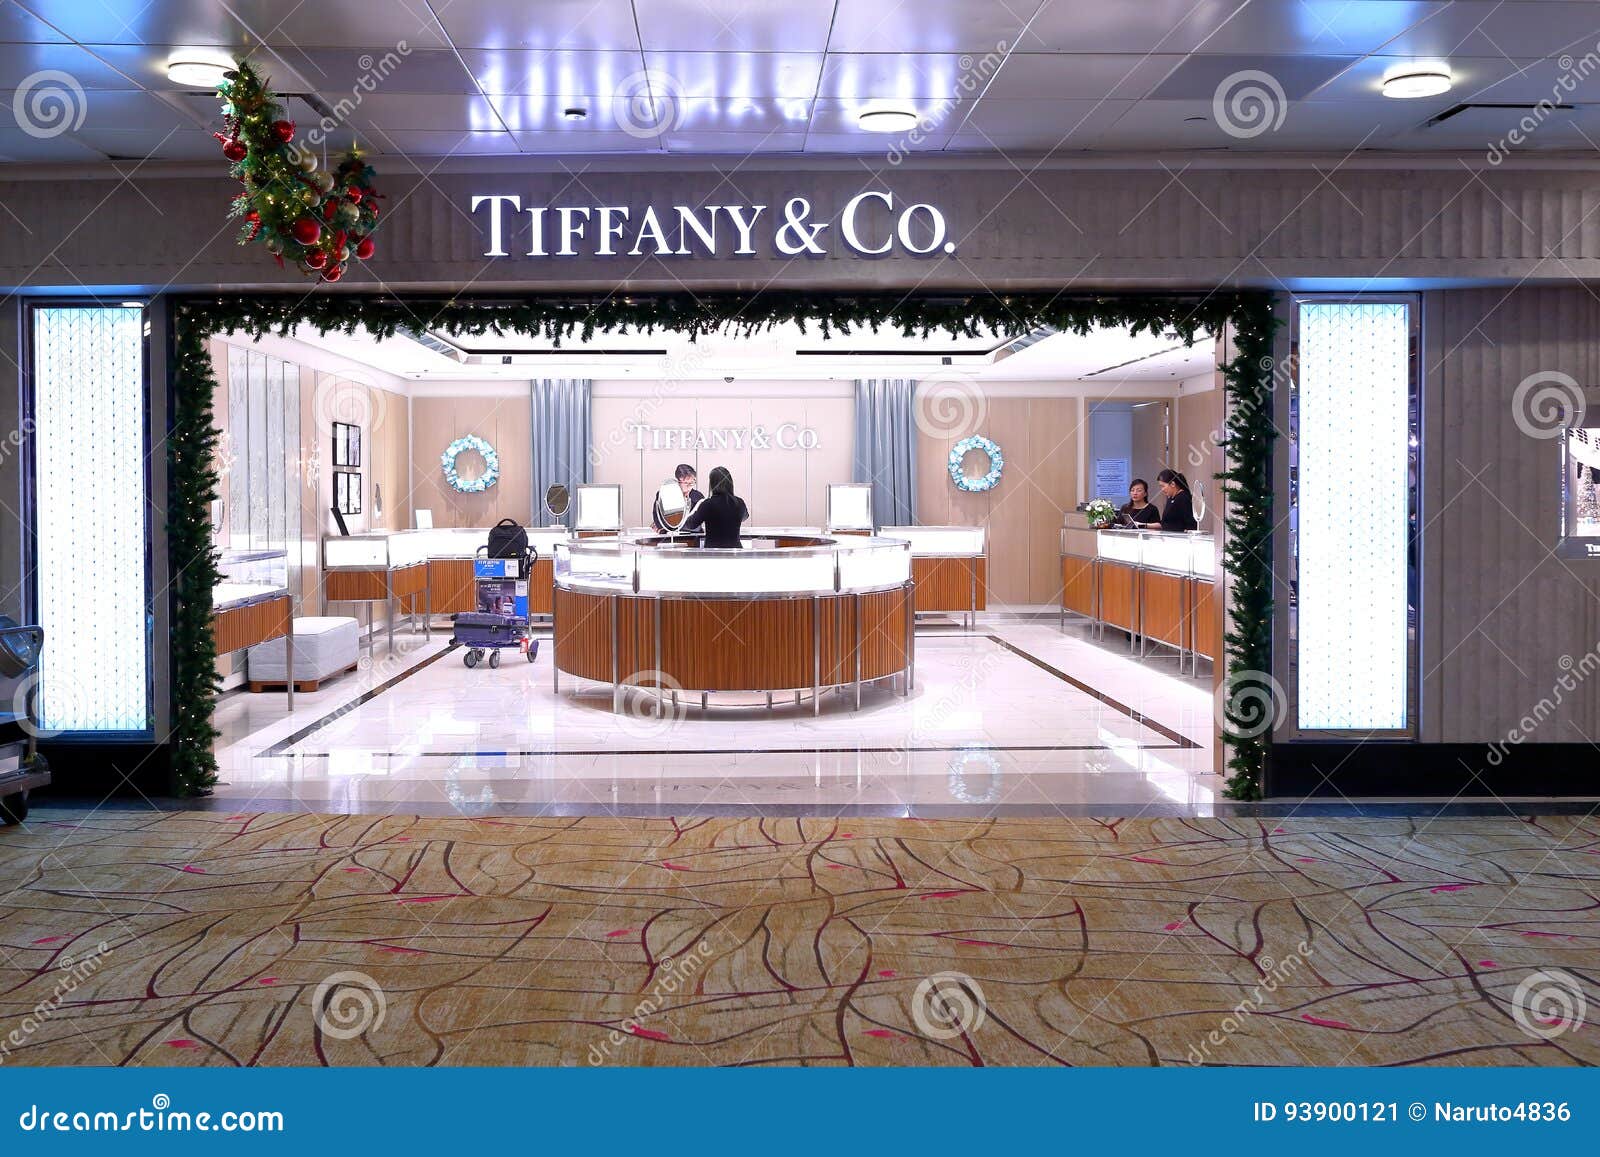 Singapore: Changi Airport Tiffany \u0026 Co 